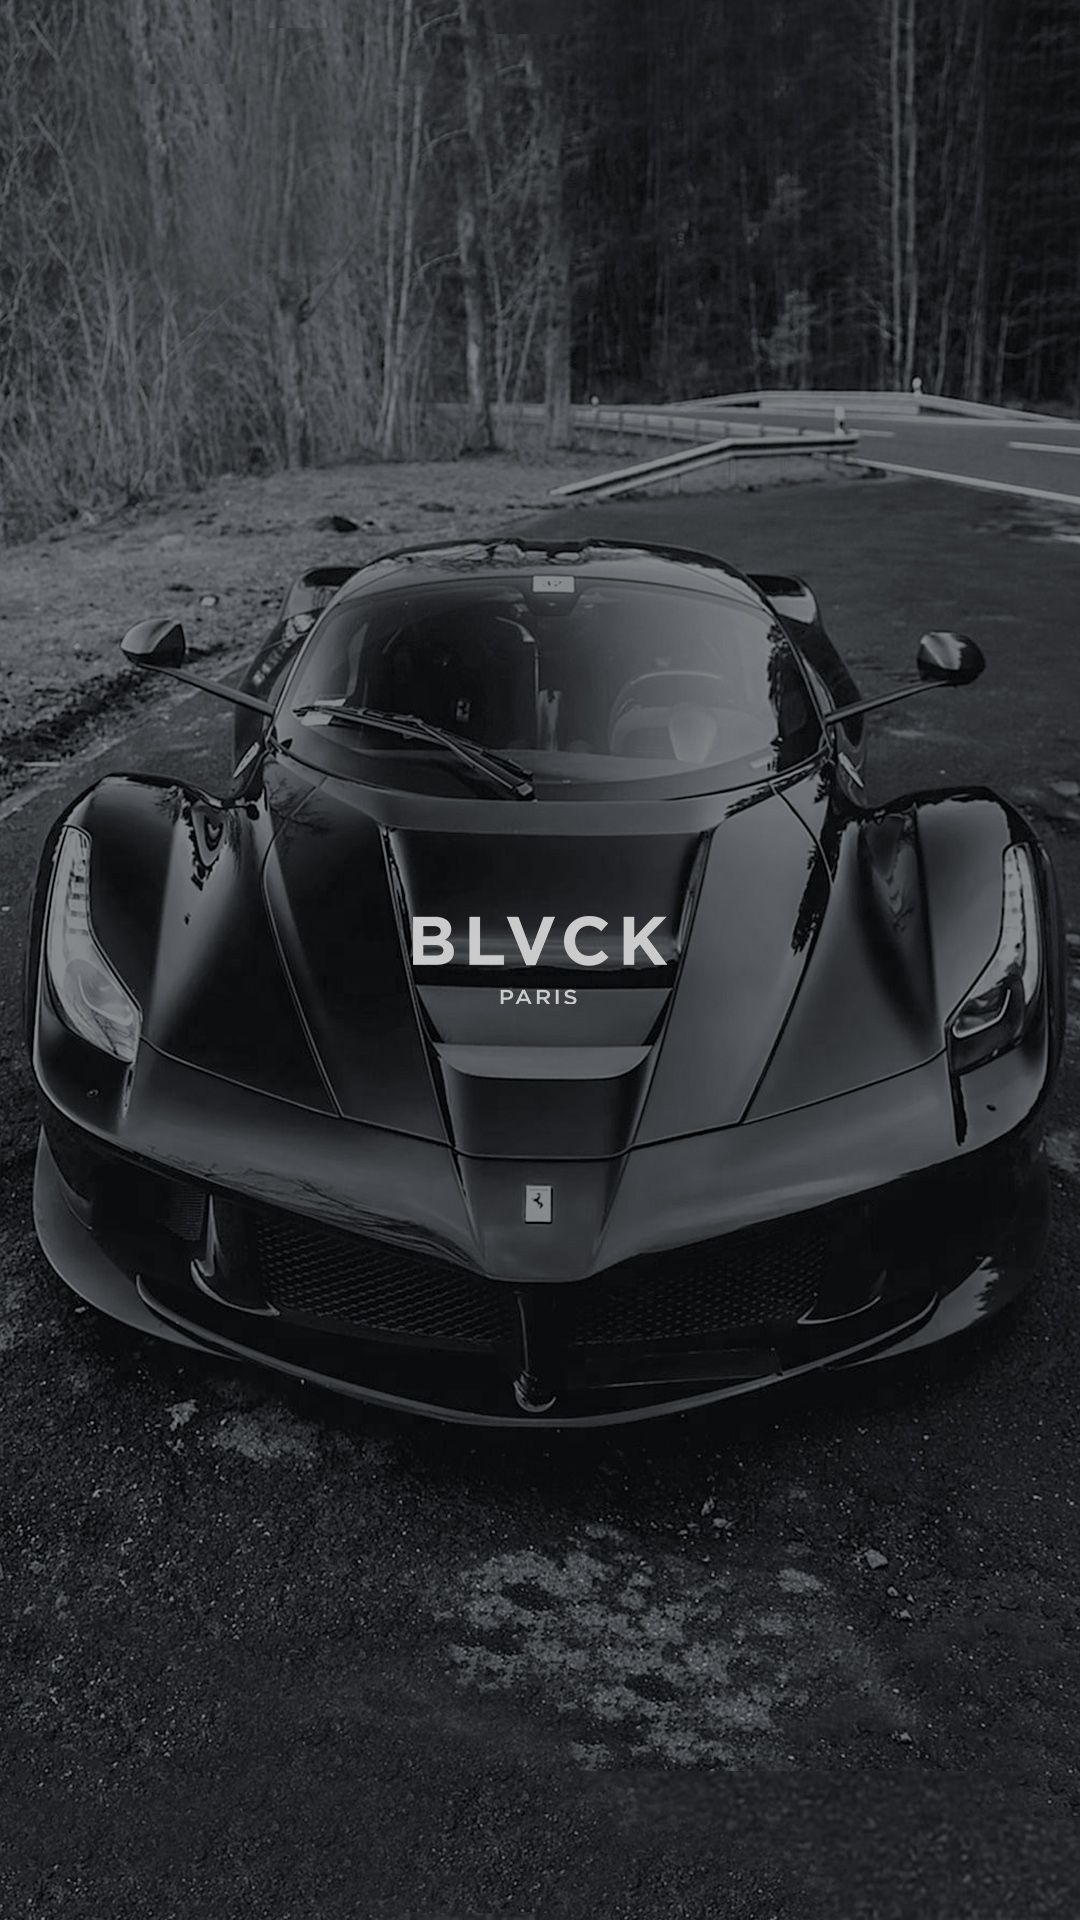  Ferrari LaFerrari Hintergrundbild 1080x1920. Black Laferrari Wallpaper. Black and white instagram, Black aesthetic wallpaper, Paris wallpaper